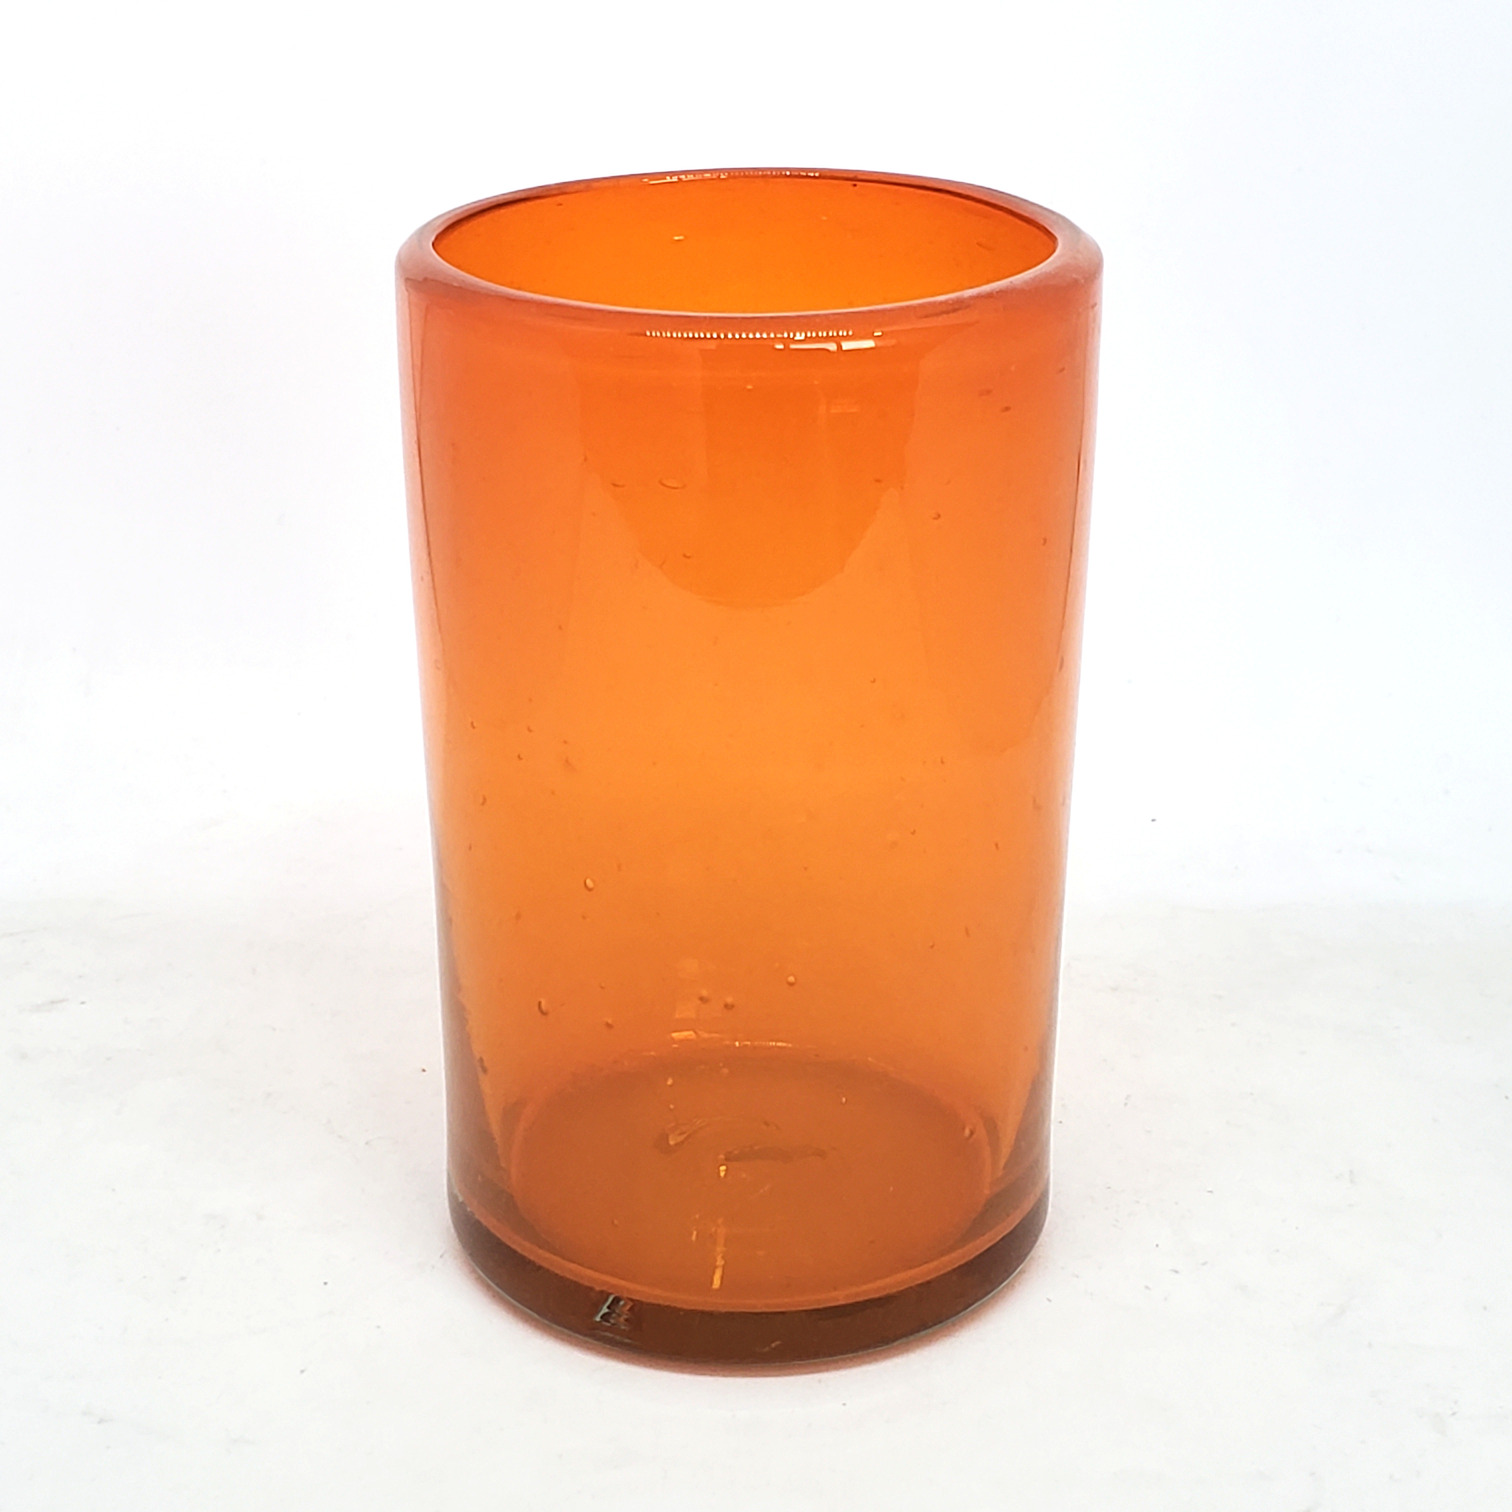  / Solid Orange 14 oz Drinking Glasses 